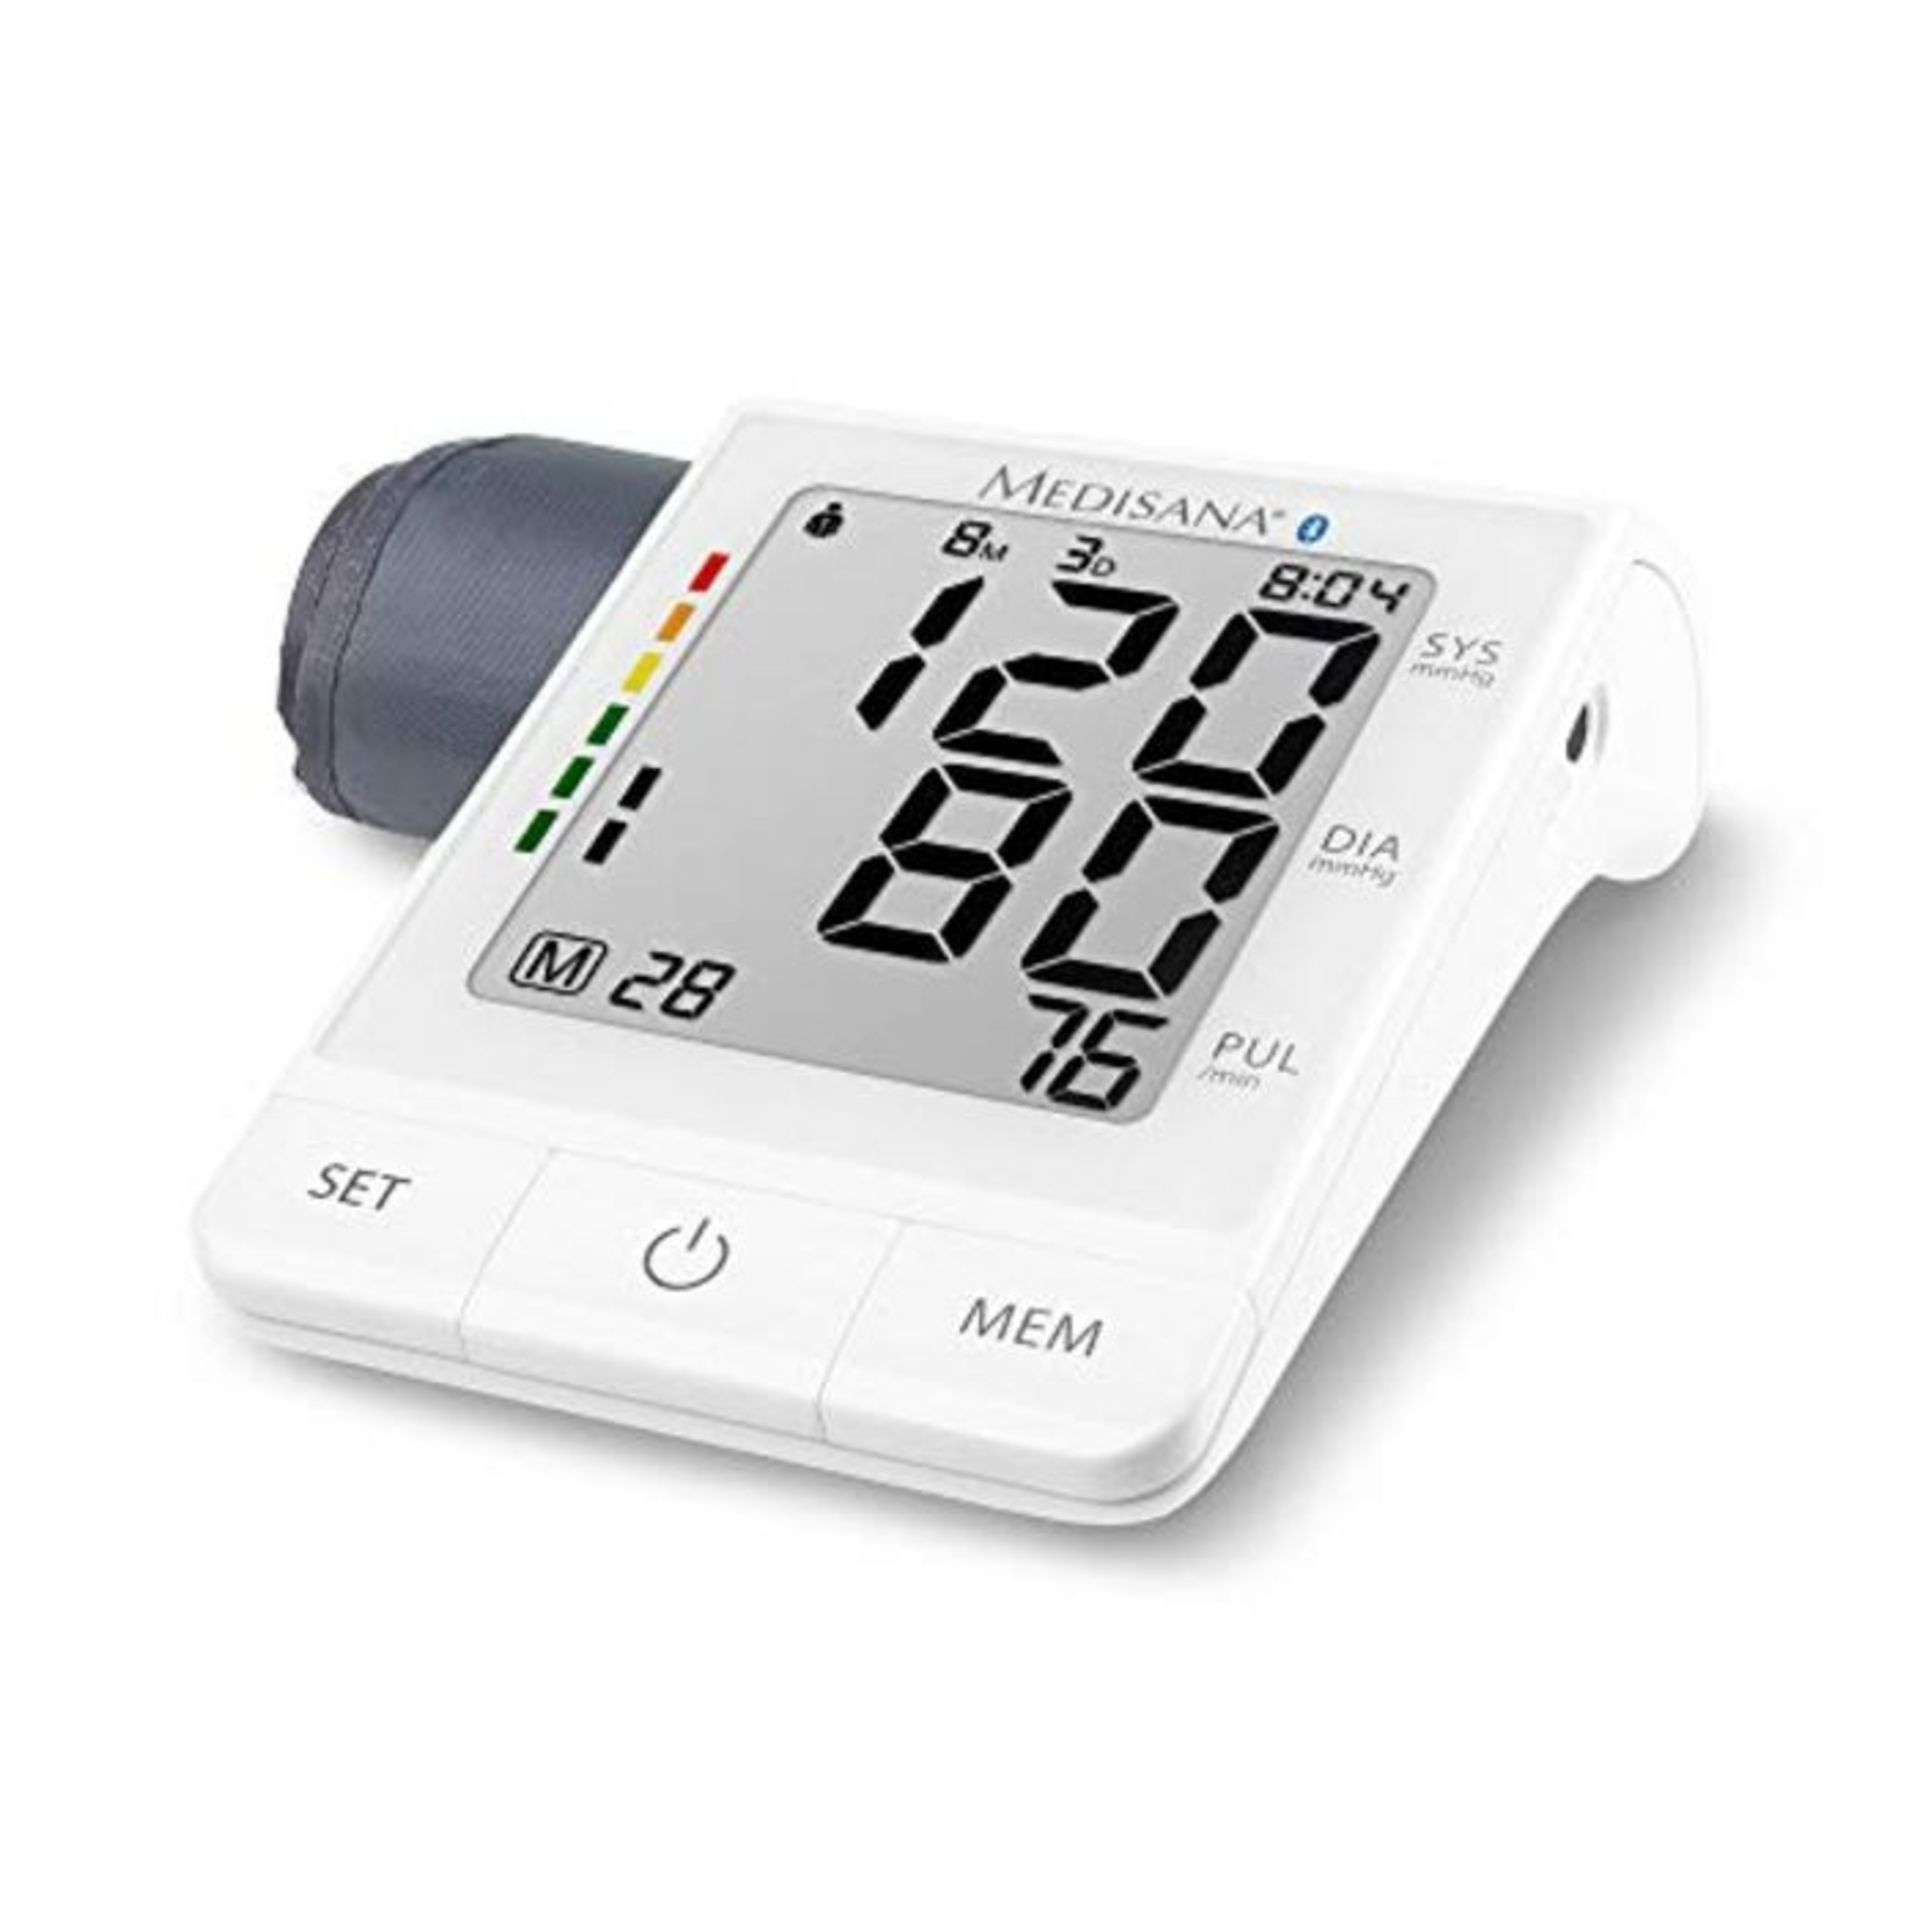 Medisana BU 530 Bluetooth Digital Upper Arm Blood Pressure Monitor - Home Use Heartbea